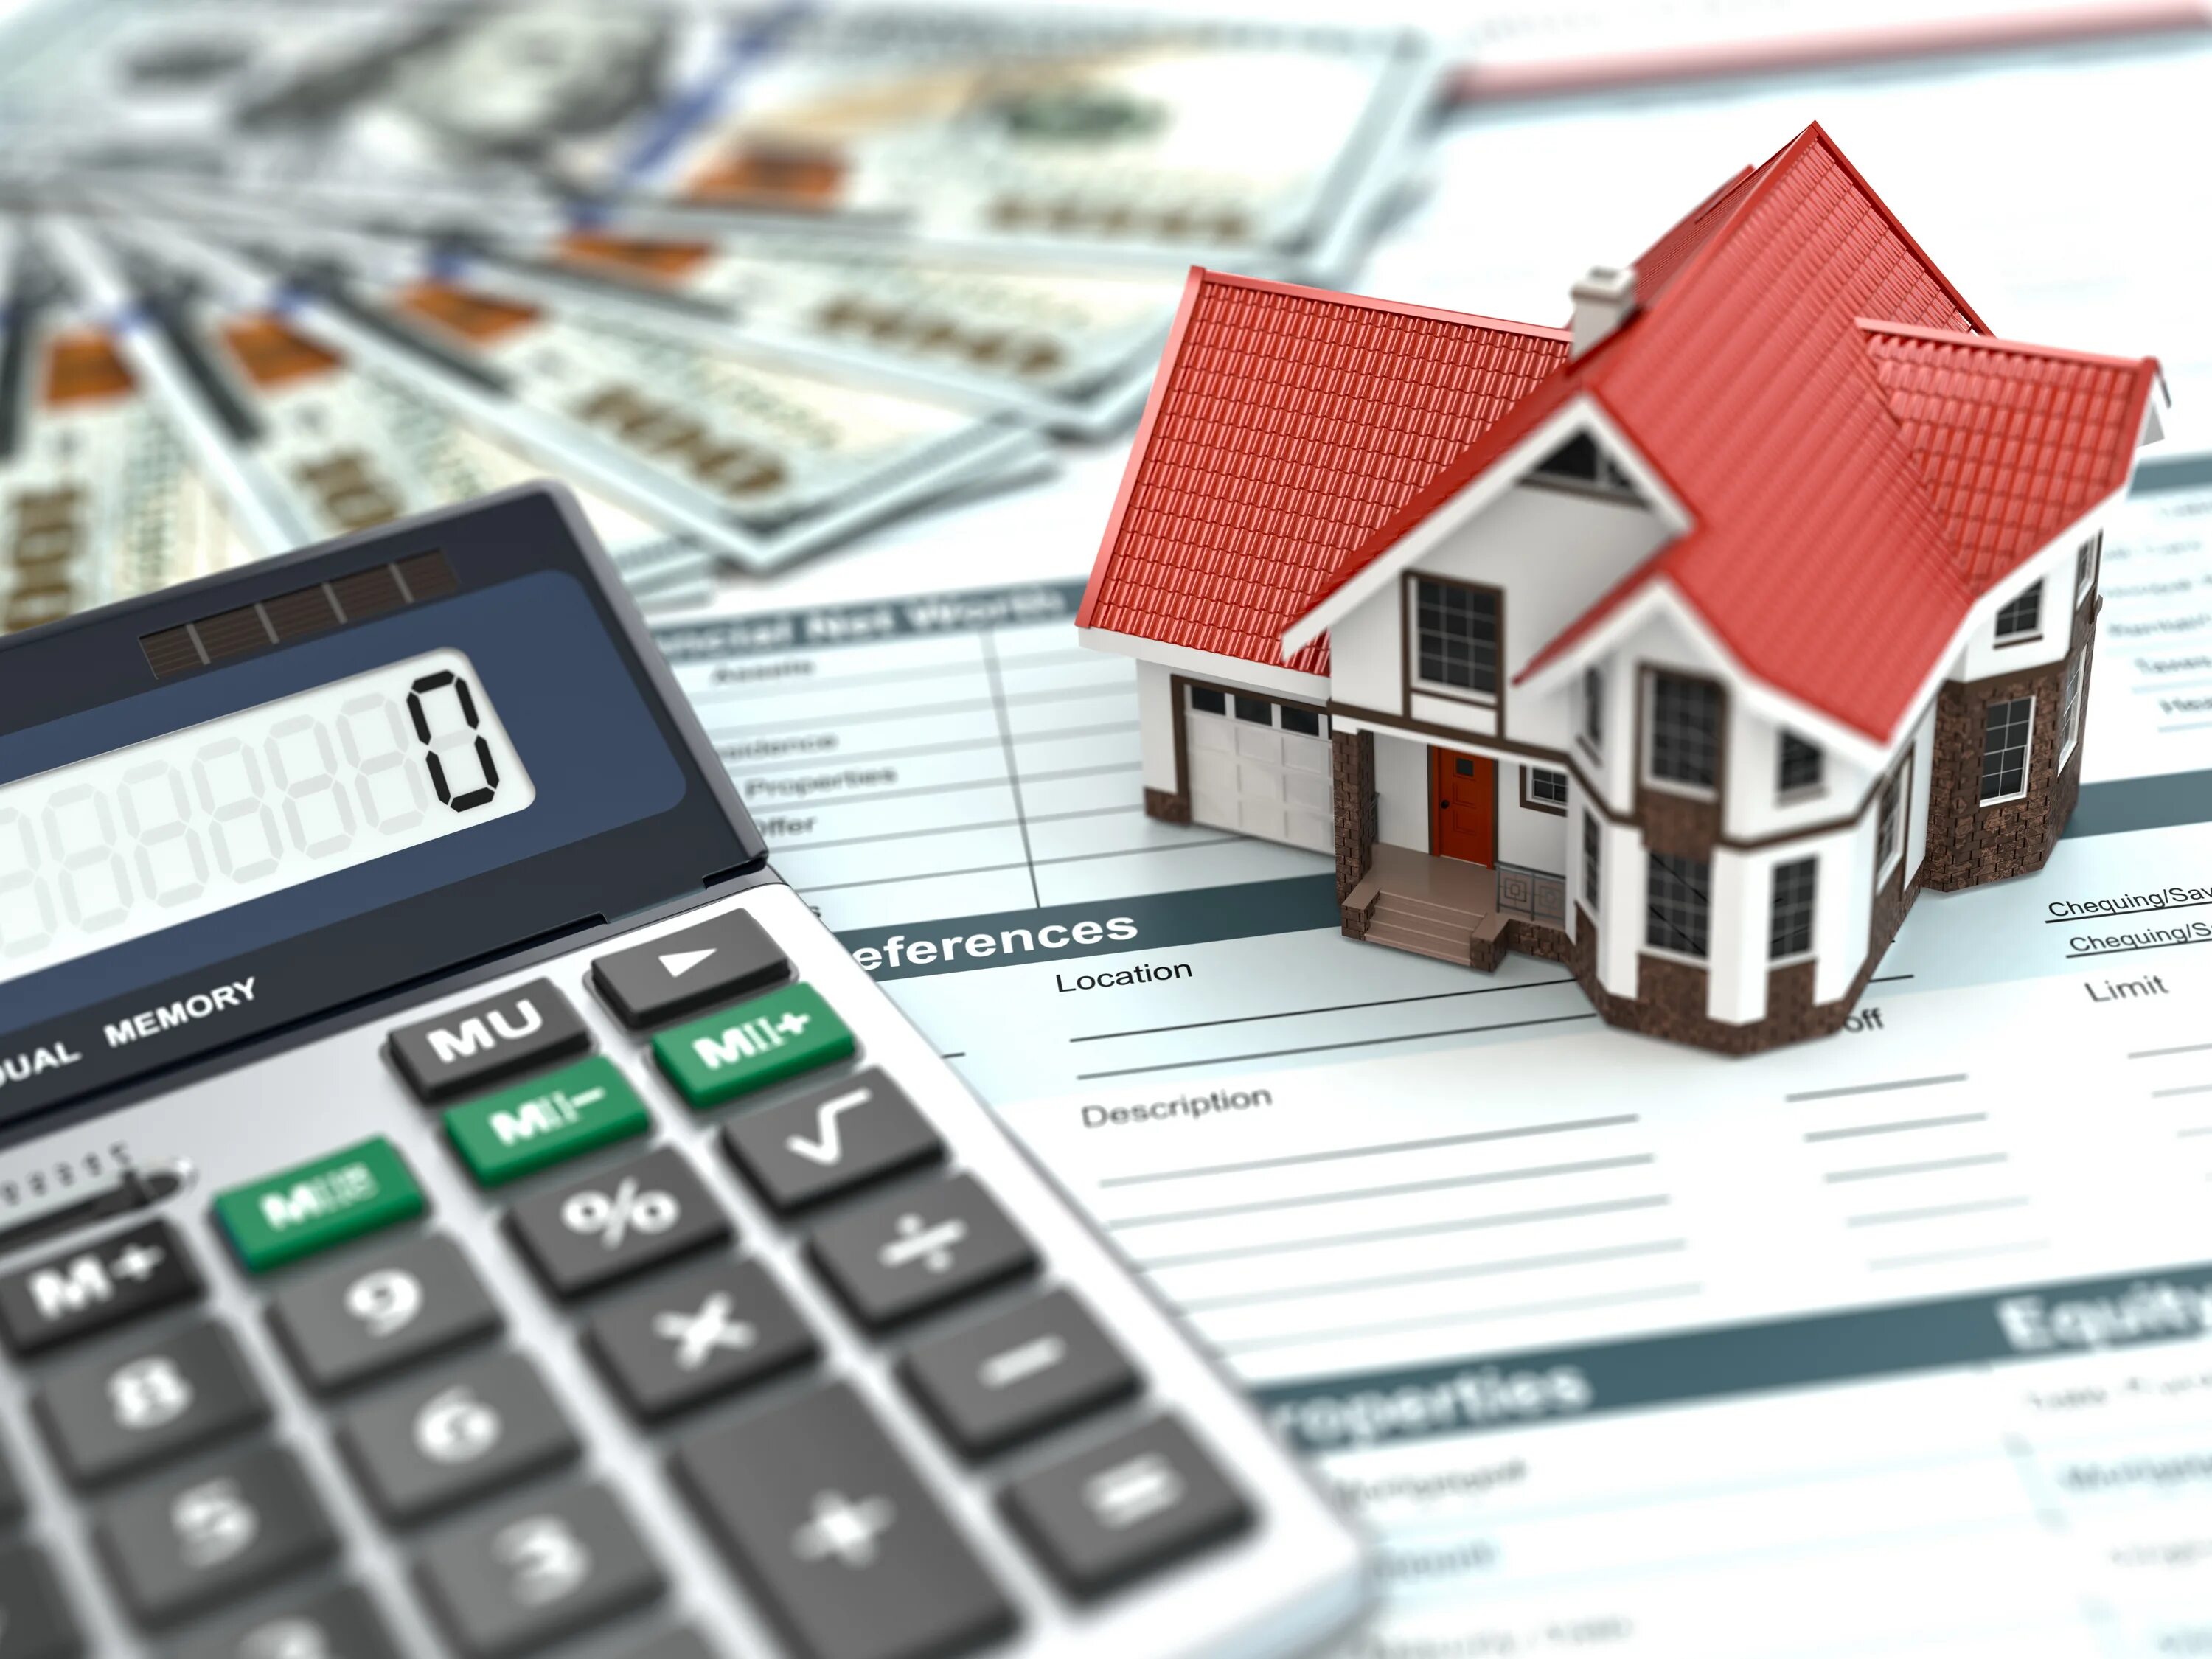 Дом калькулятор. Оценка недвижимости. Налог на недвижимость. Рынок недвижимости.